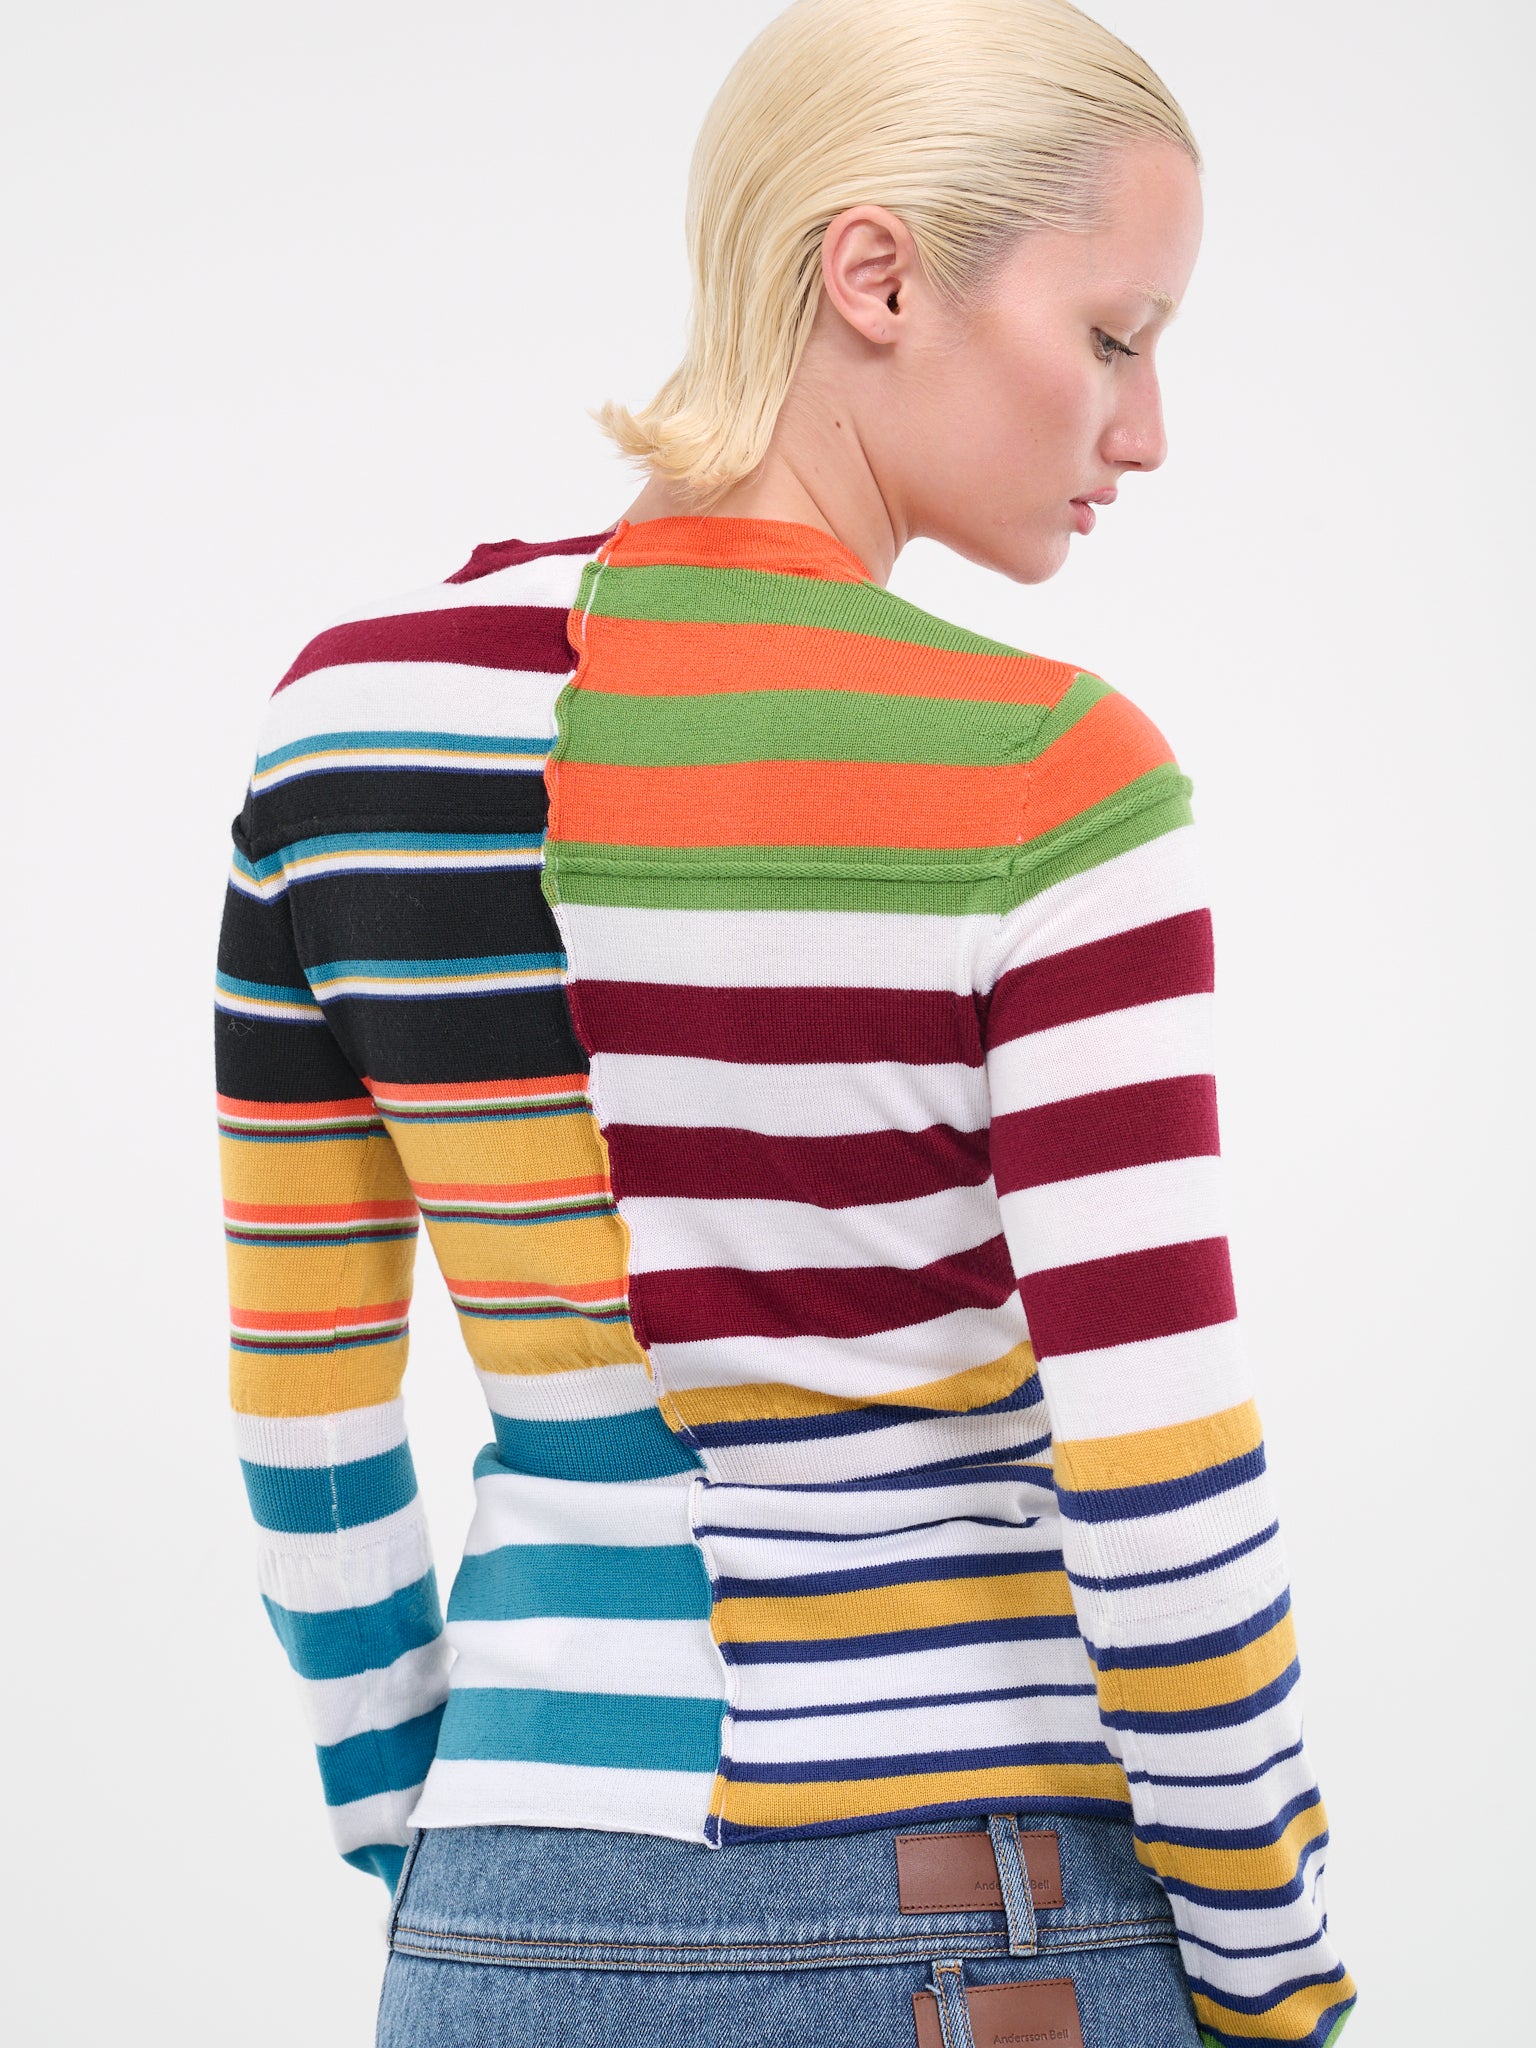 Bregançon Sailor Striped Elbow Patches Sweater Pullover